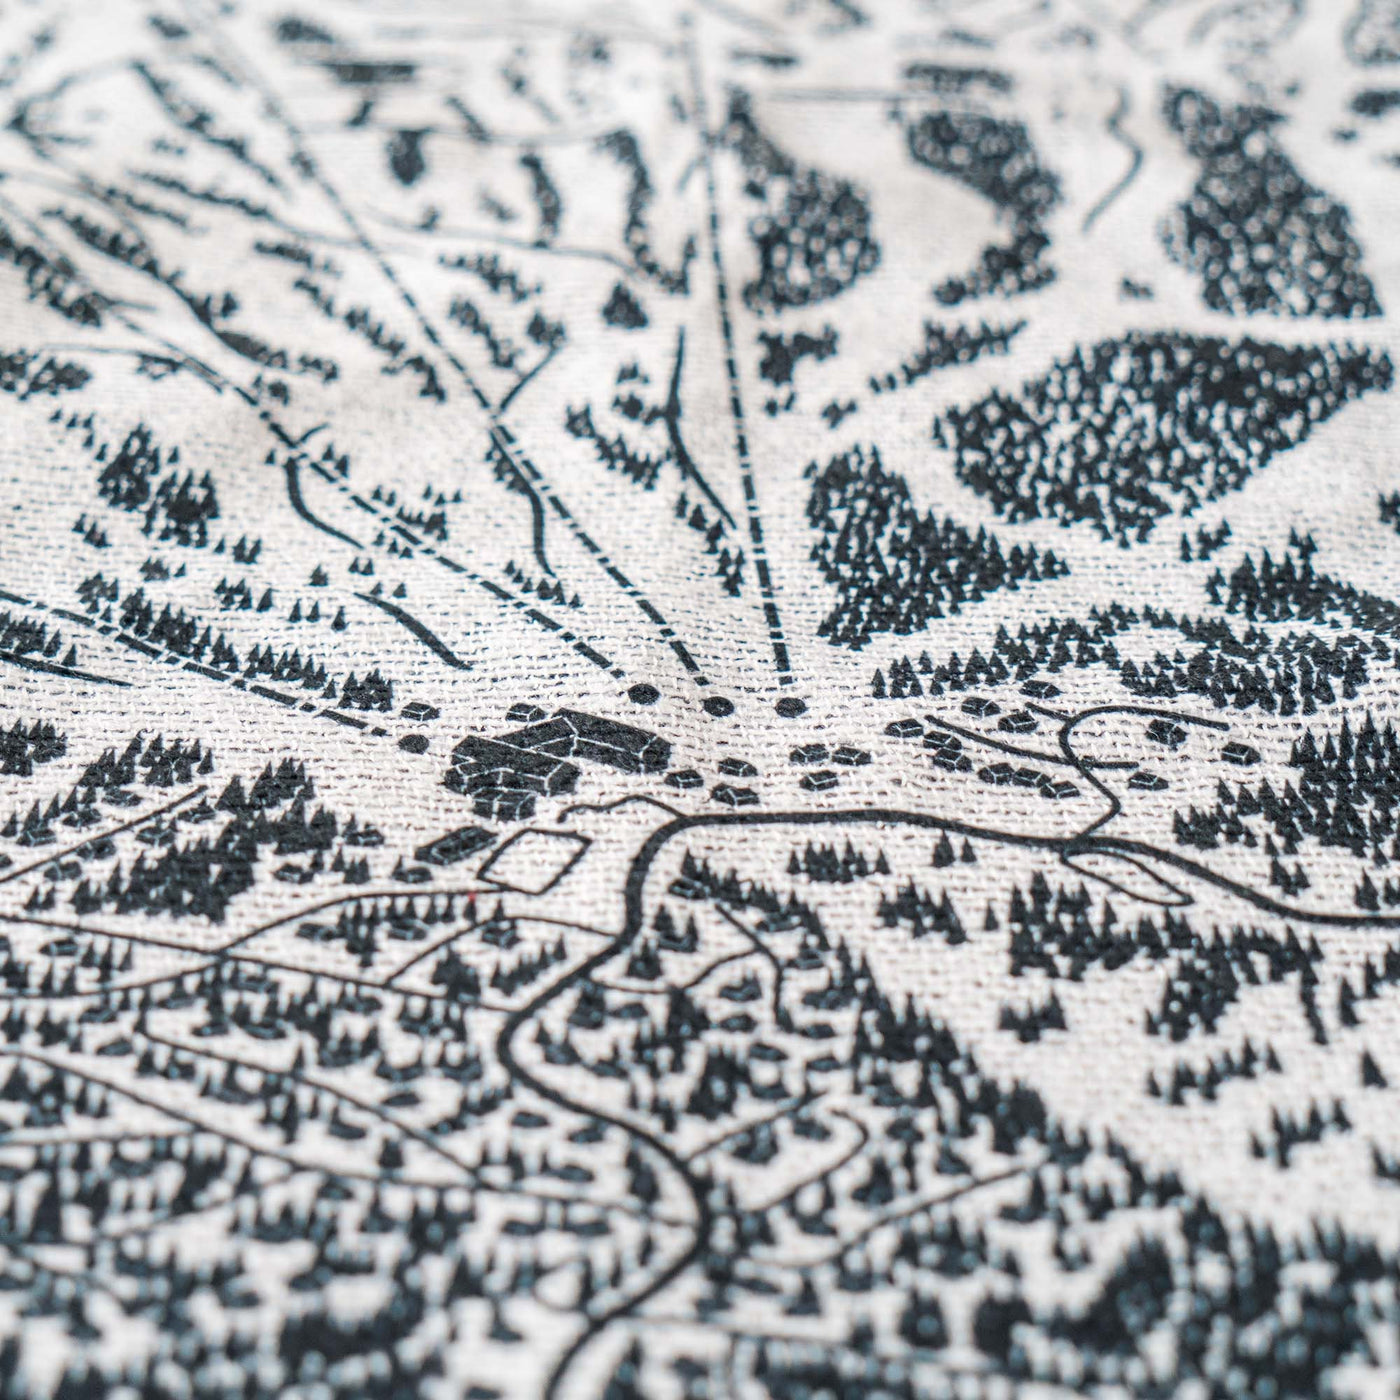 Telluride, Colorado Ski Trail Map Blankets